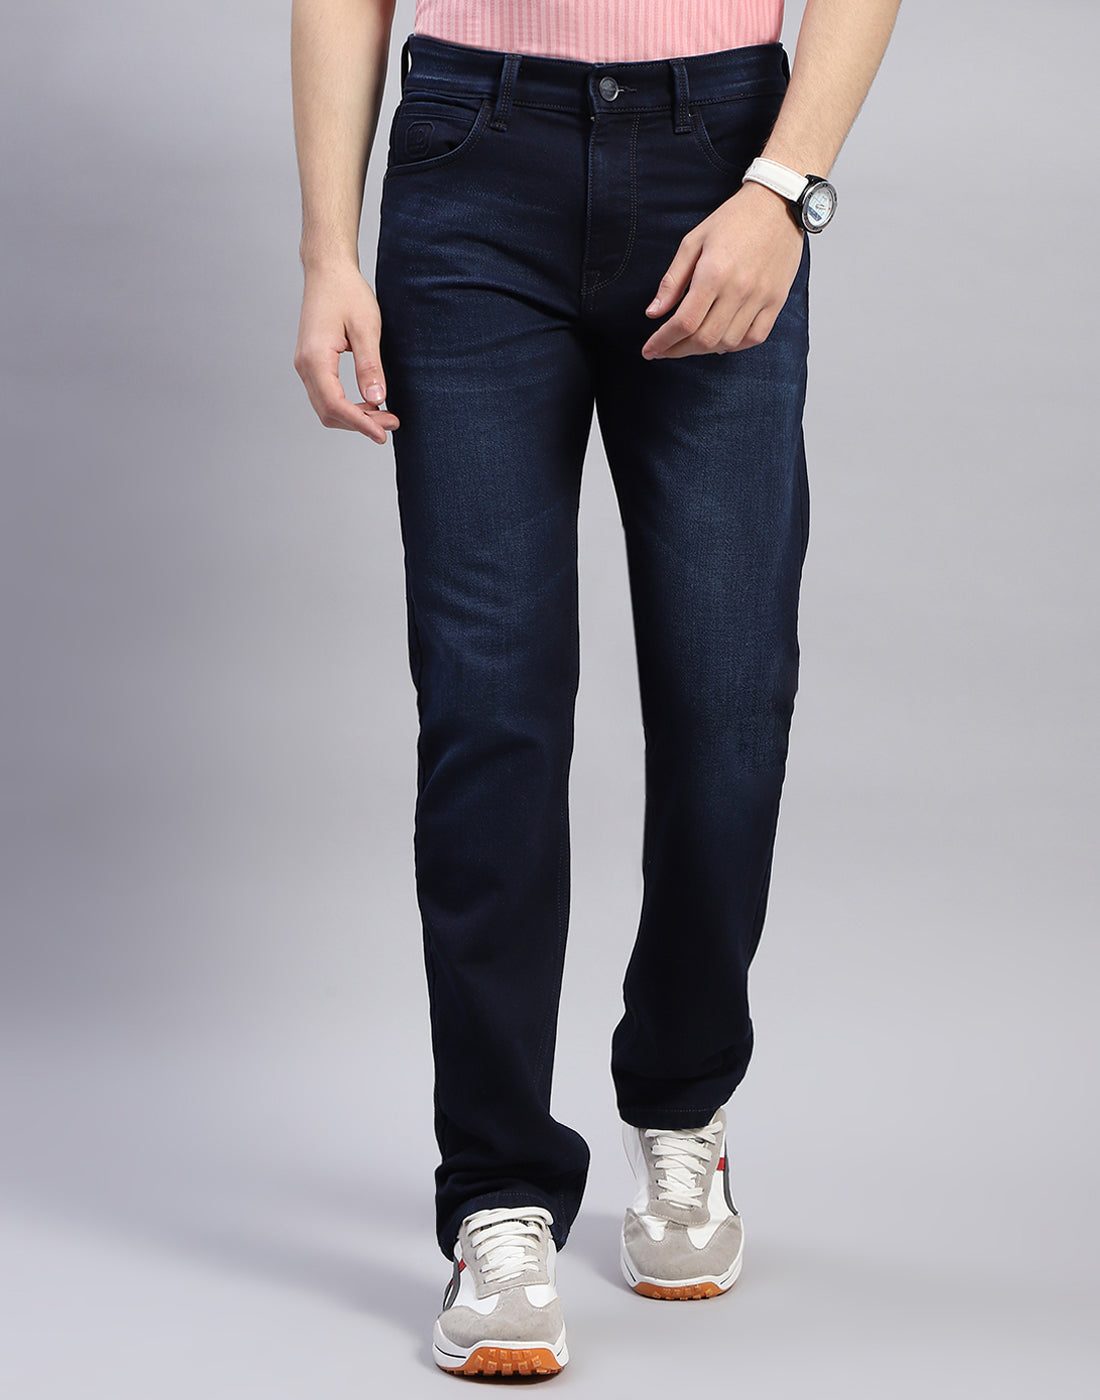 Men Denims - Buy Jeans For Men Online in India - Monte Carlo